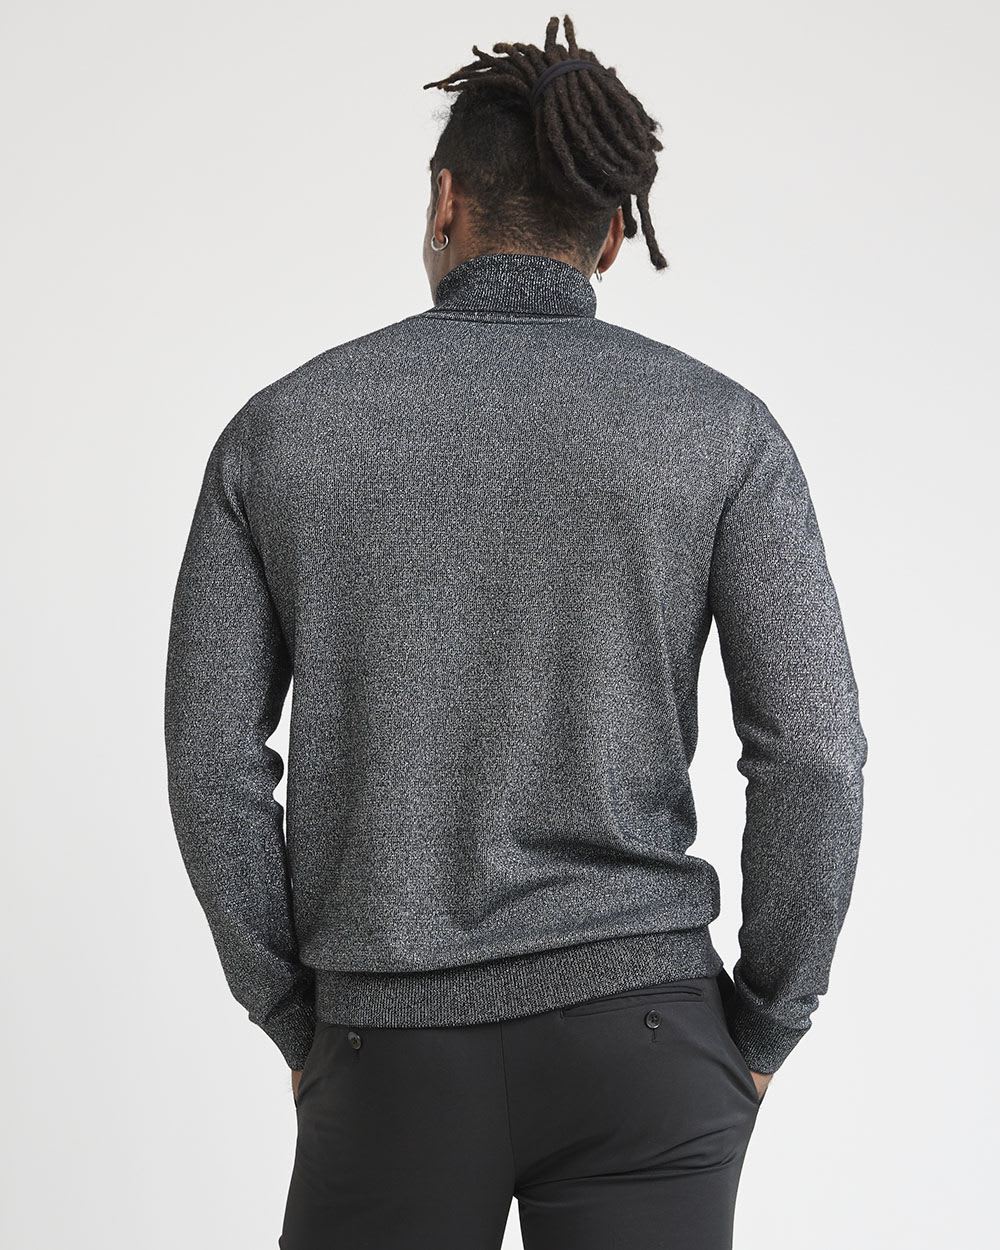 Long-Sleeve Turtleneck Sweater with Metallic Fibres | RW&CO.